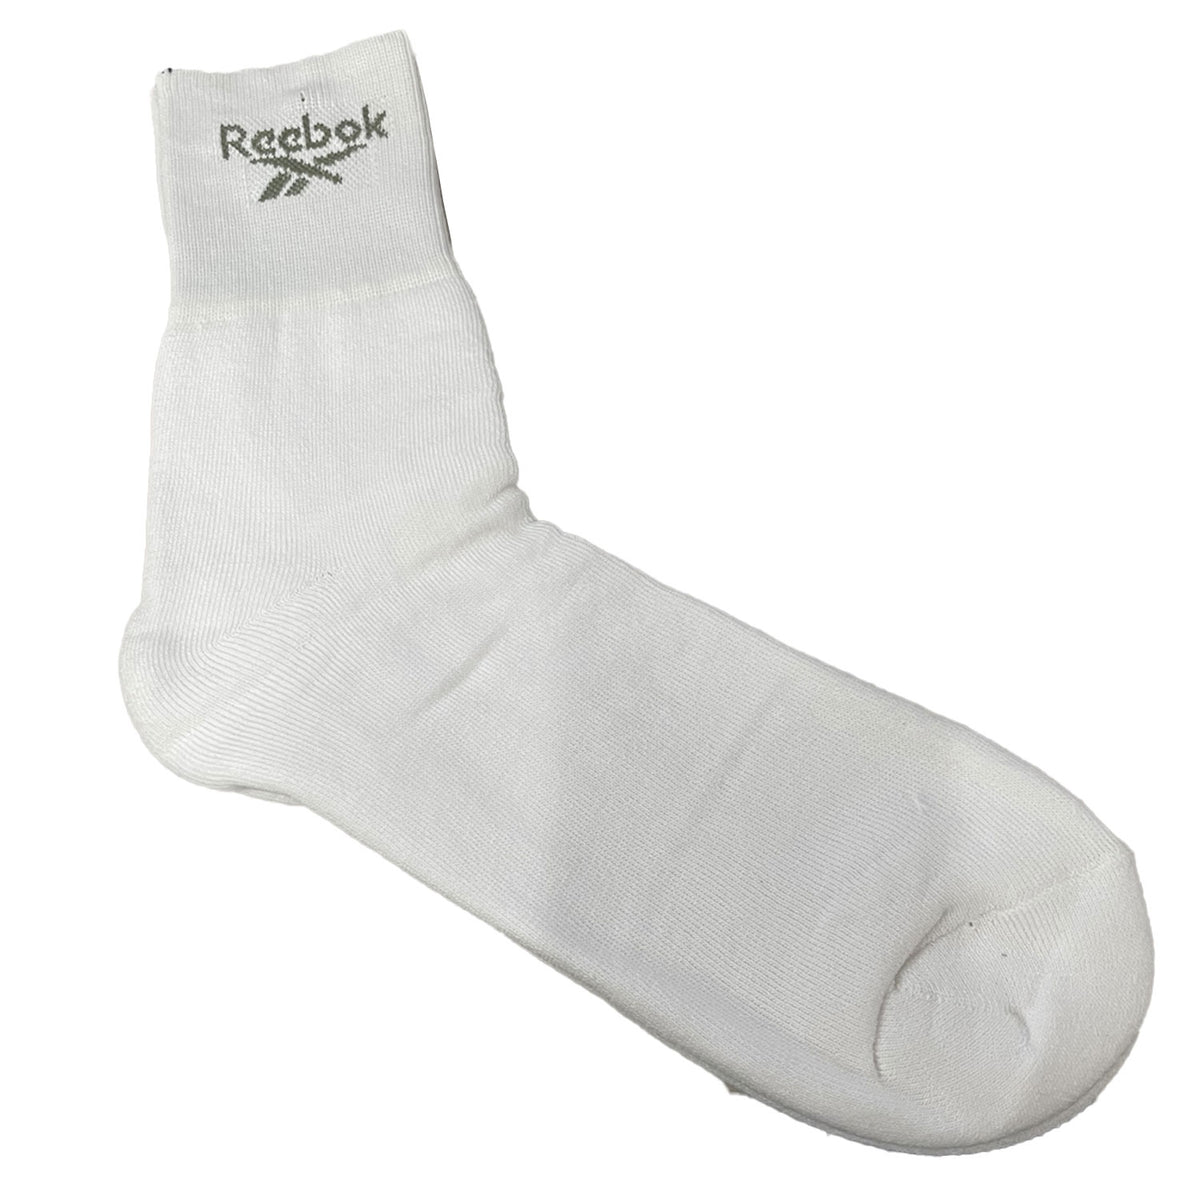 Reebok Womens Foldover Socks